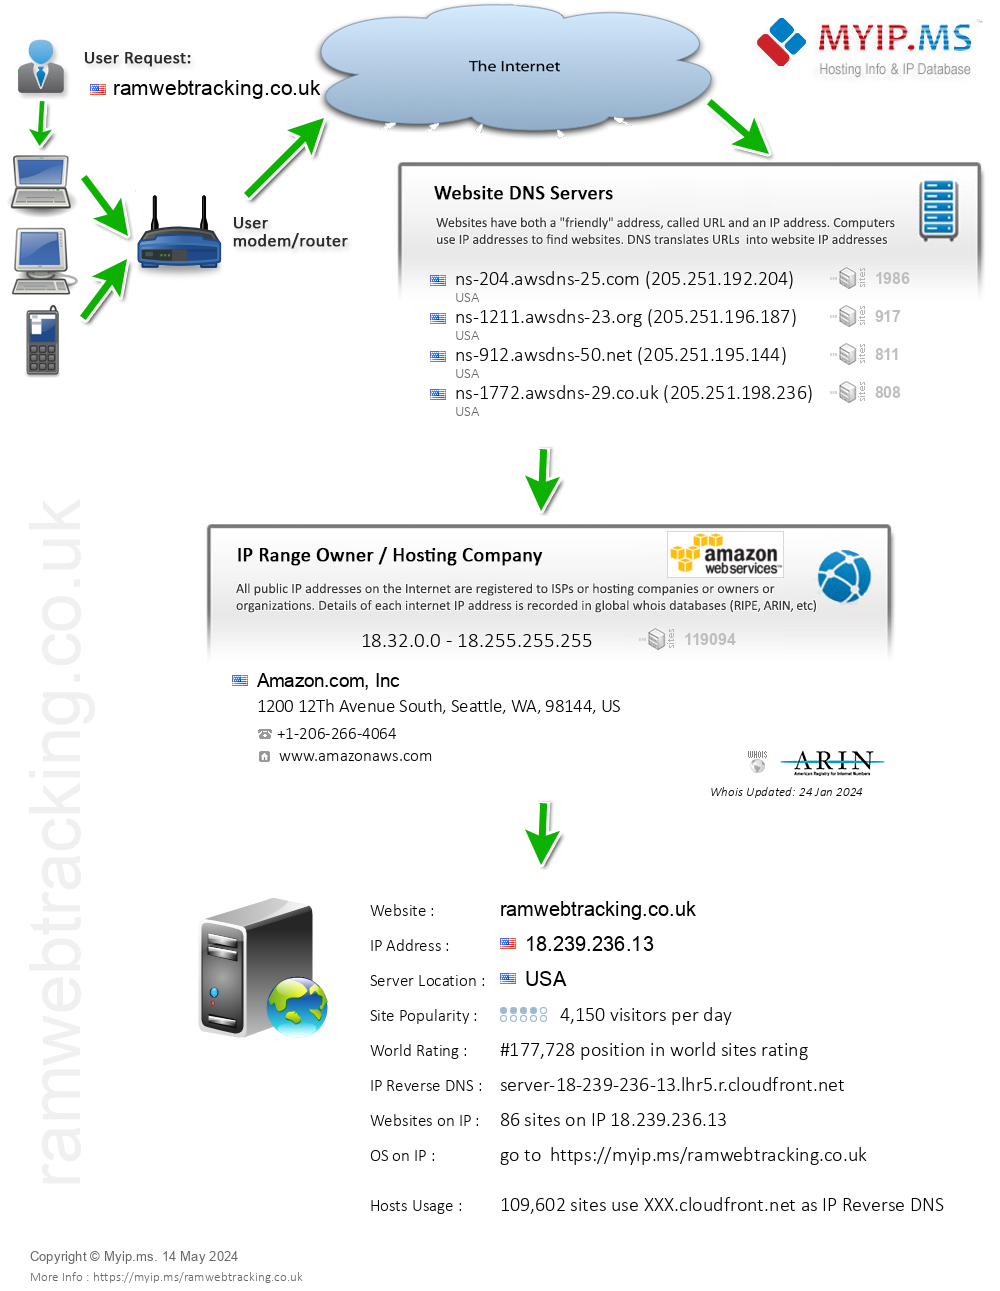 Ramwebtracking.co.uk - Website Hosting Visual IP Diagram